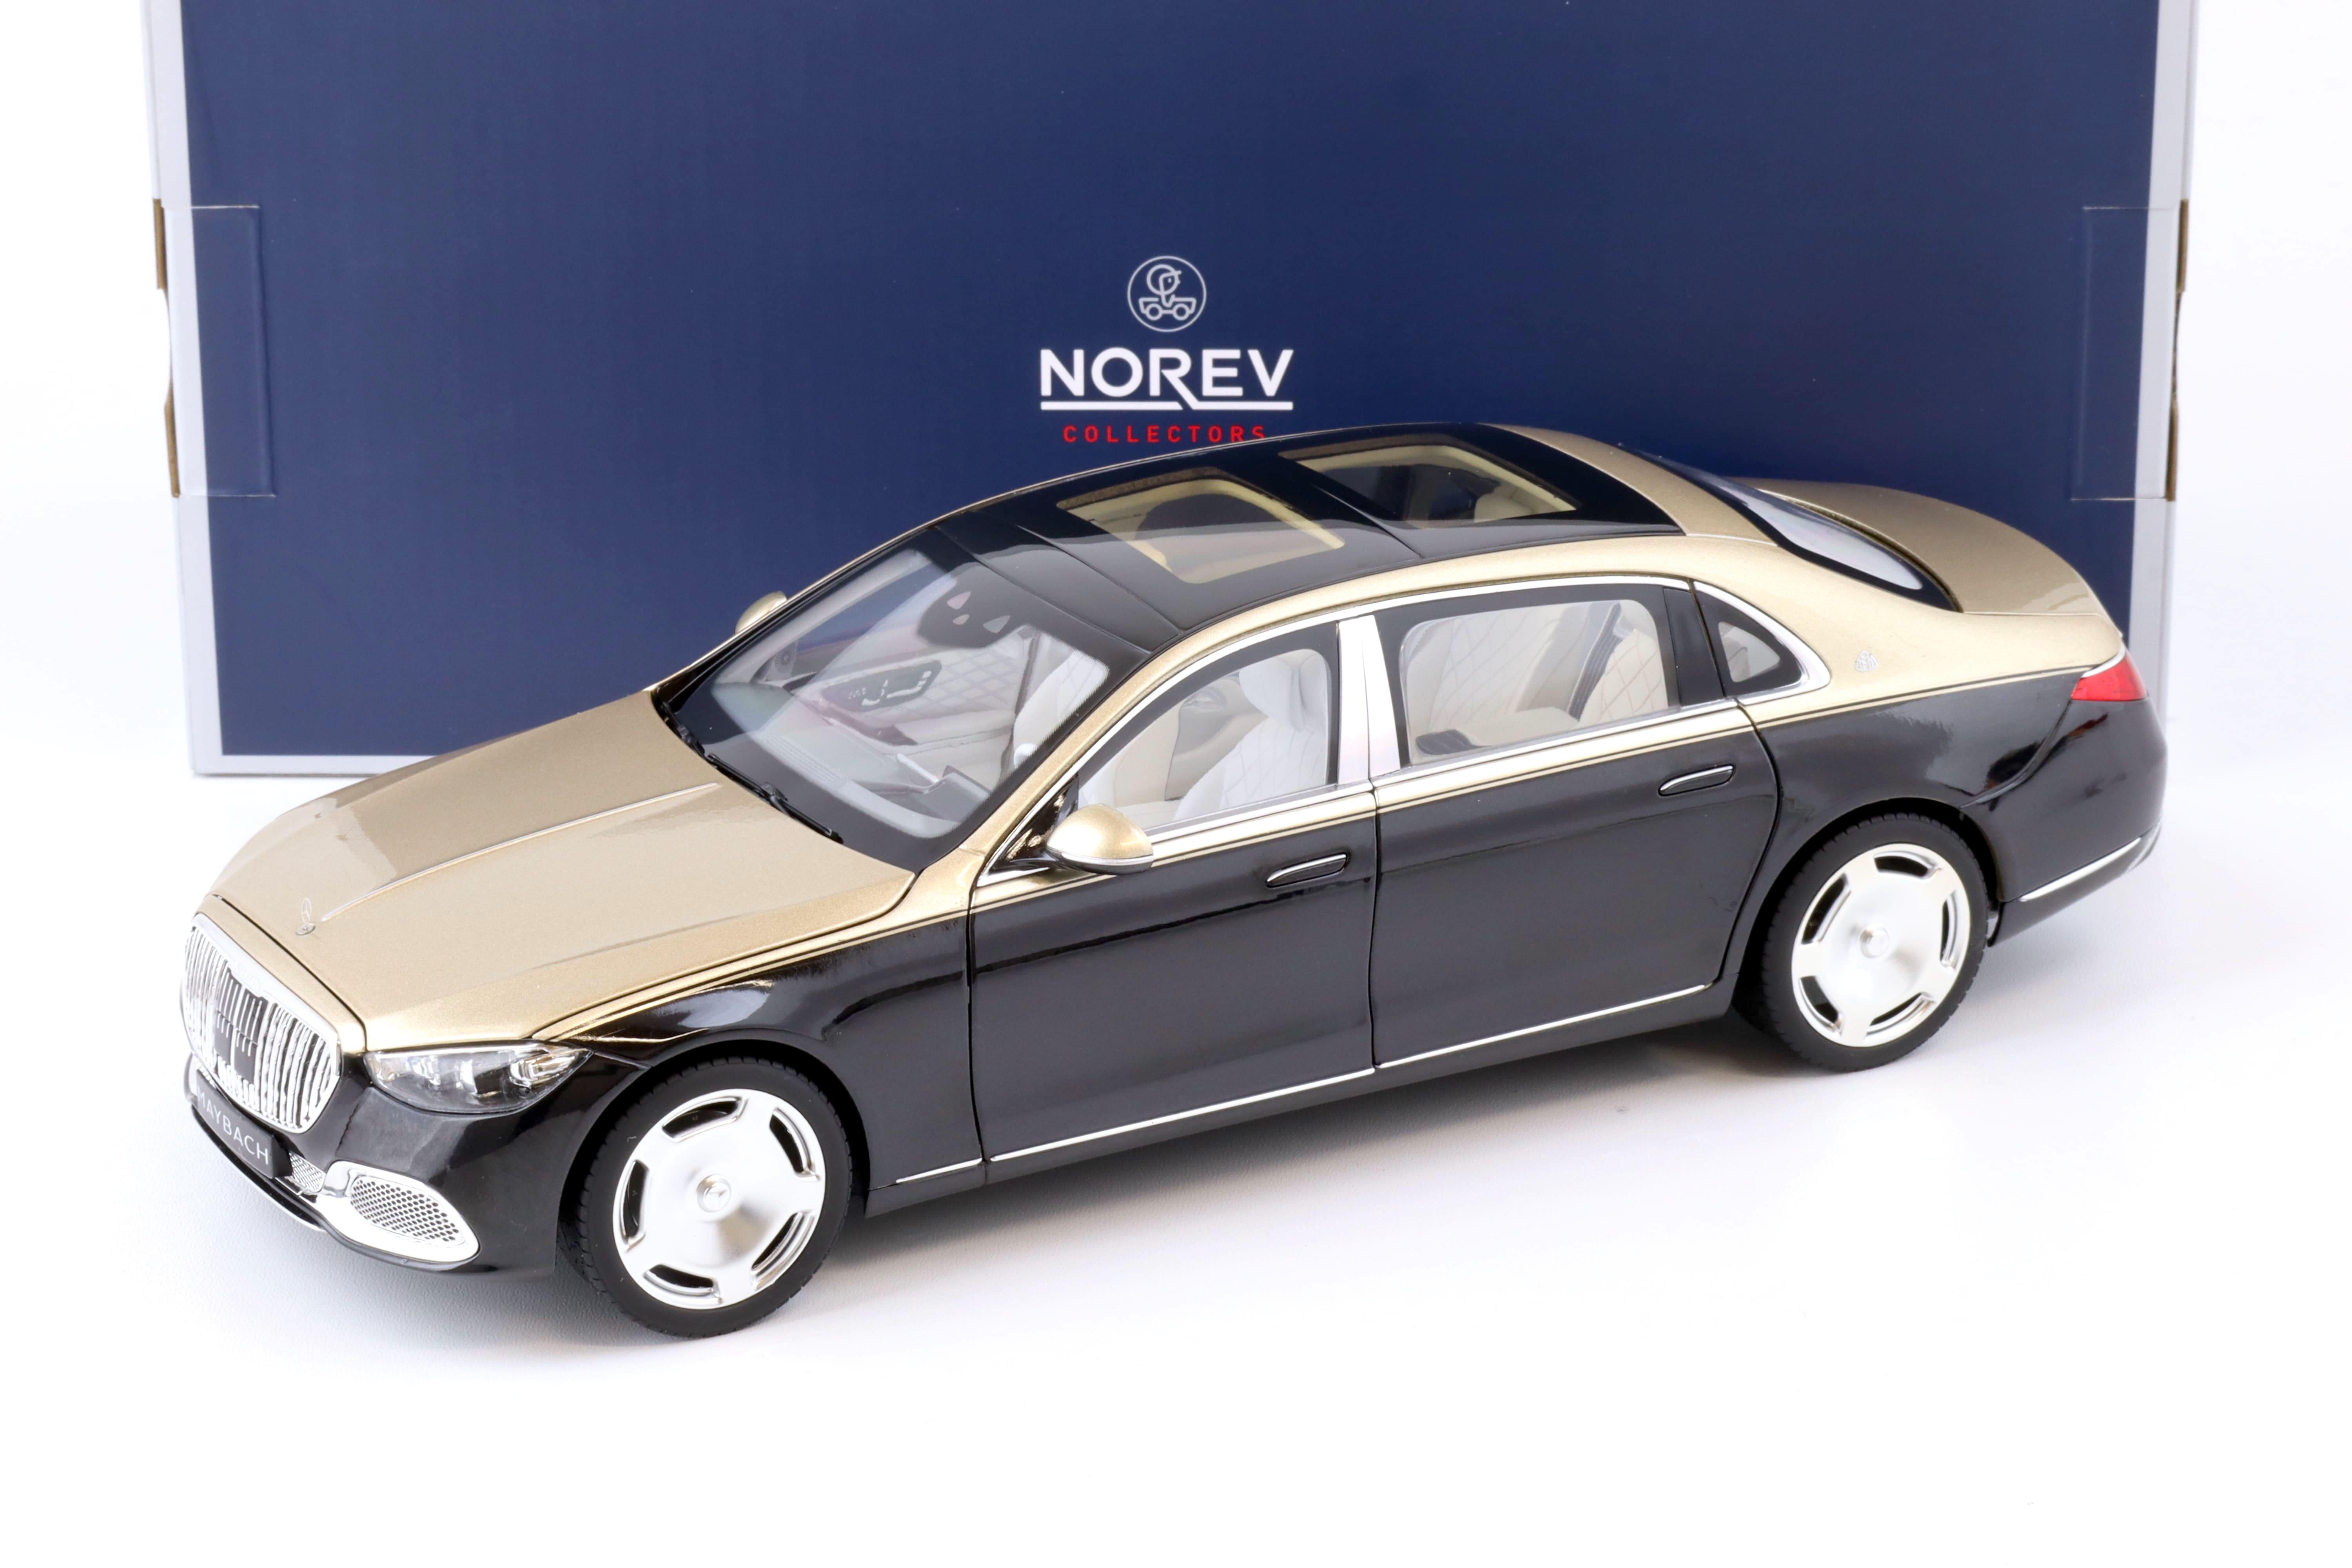 1:18 Norev Mercedes-Maybach S 680 4MATIC 2021 gold / black metallic